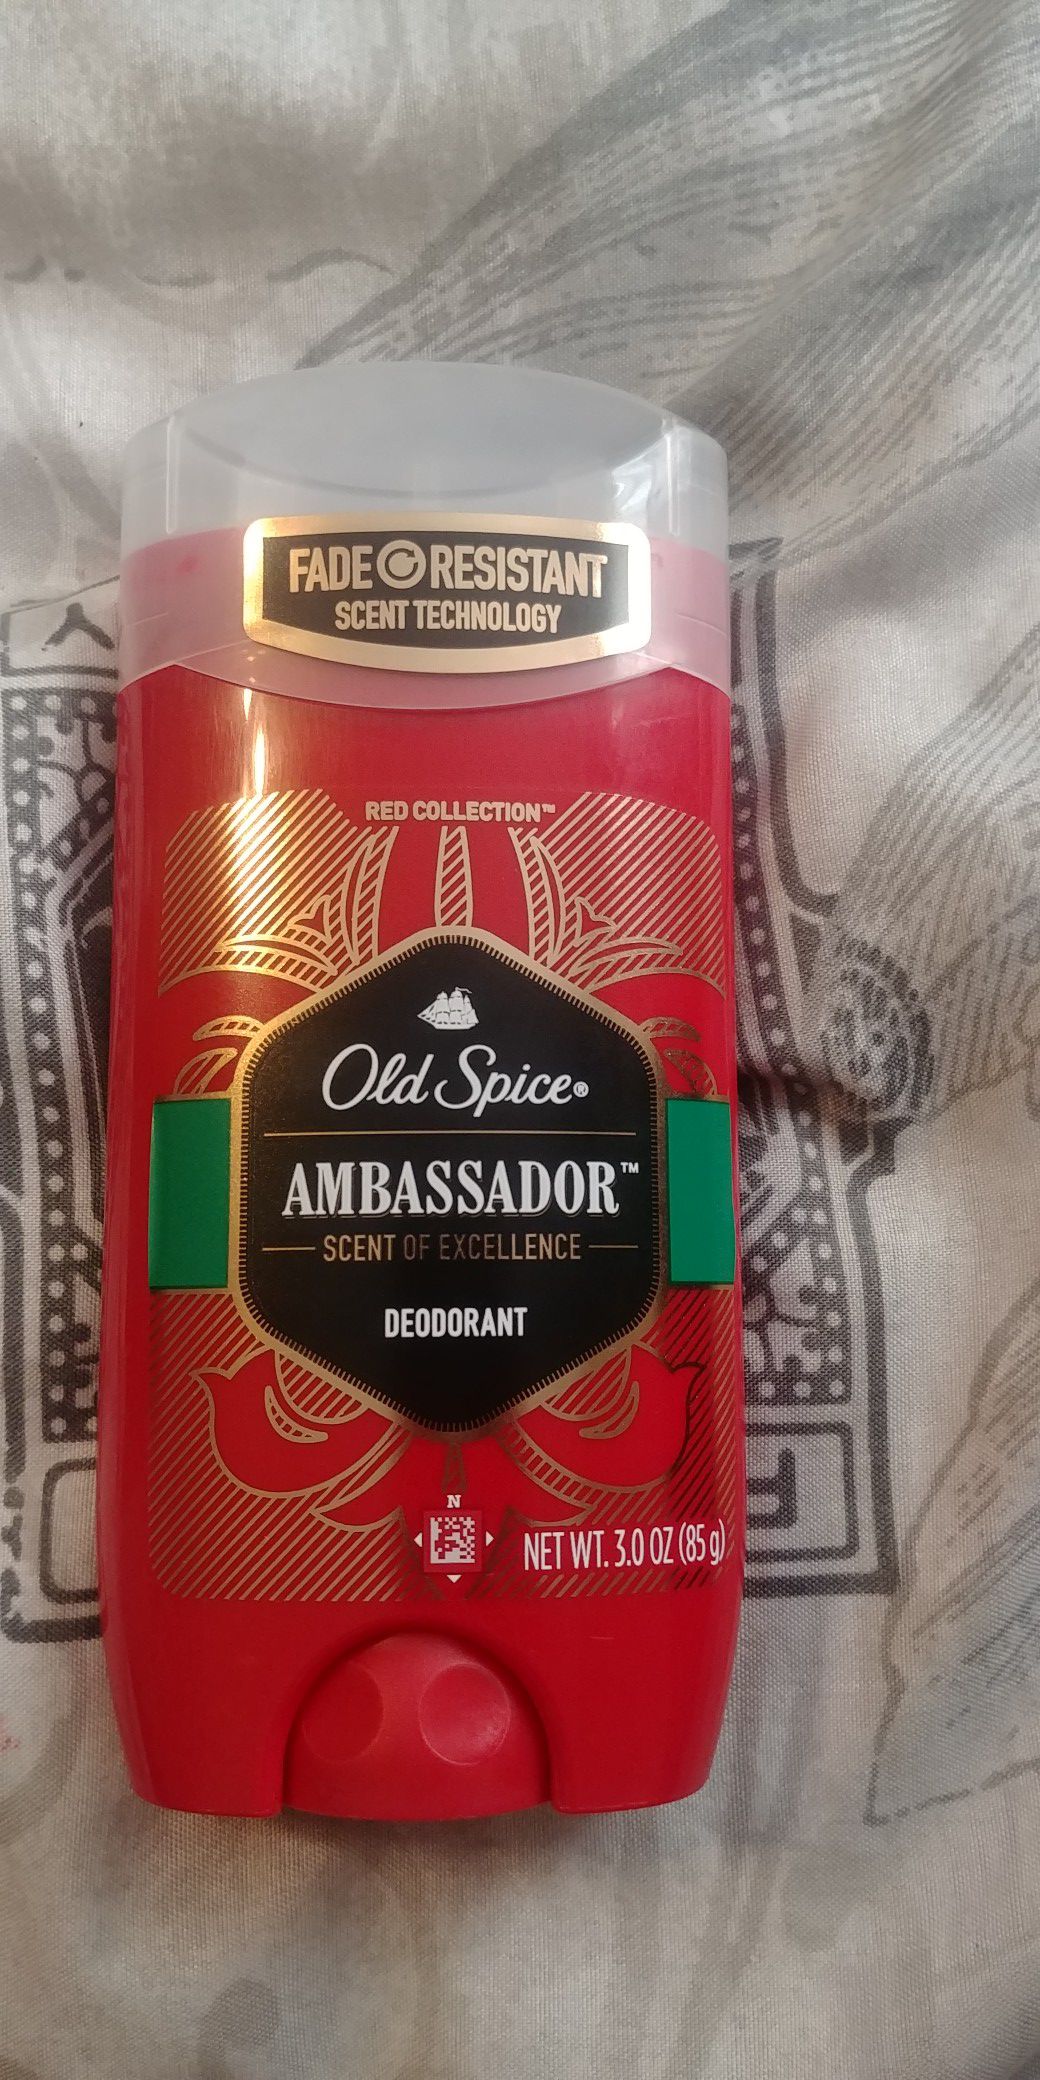 New Old Spice deodorant